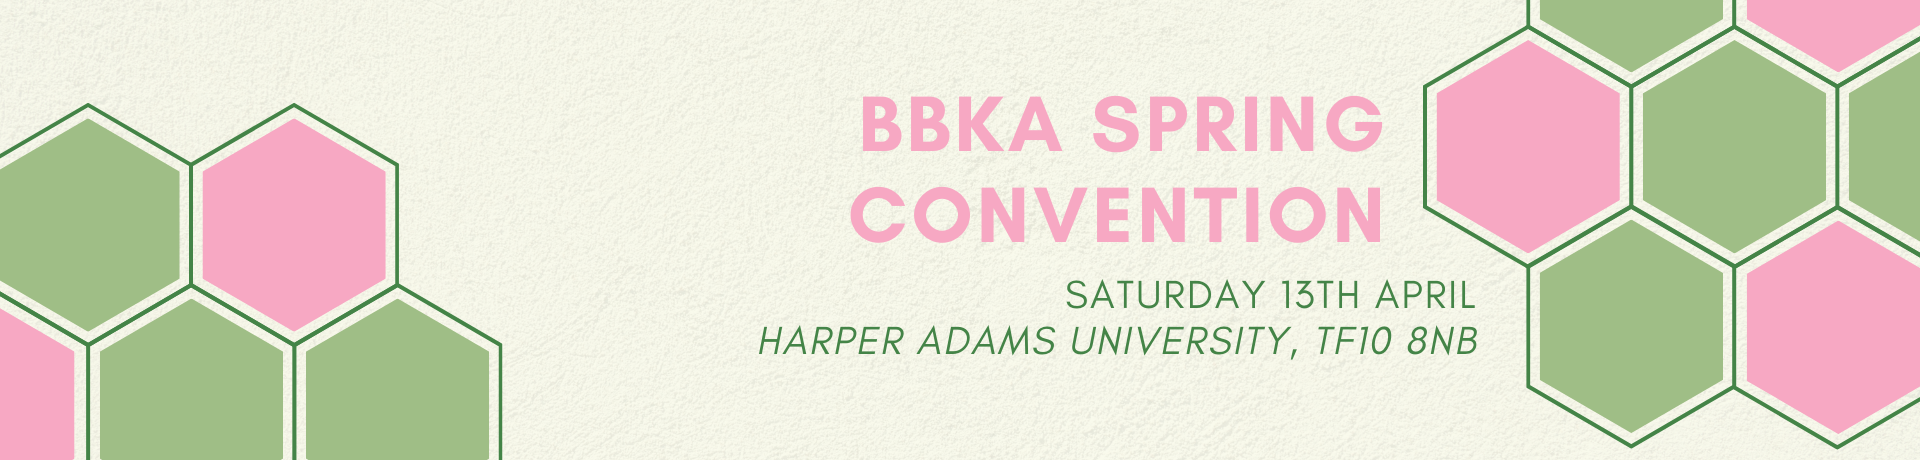 BBKA Spring Convention